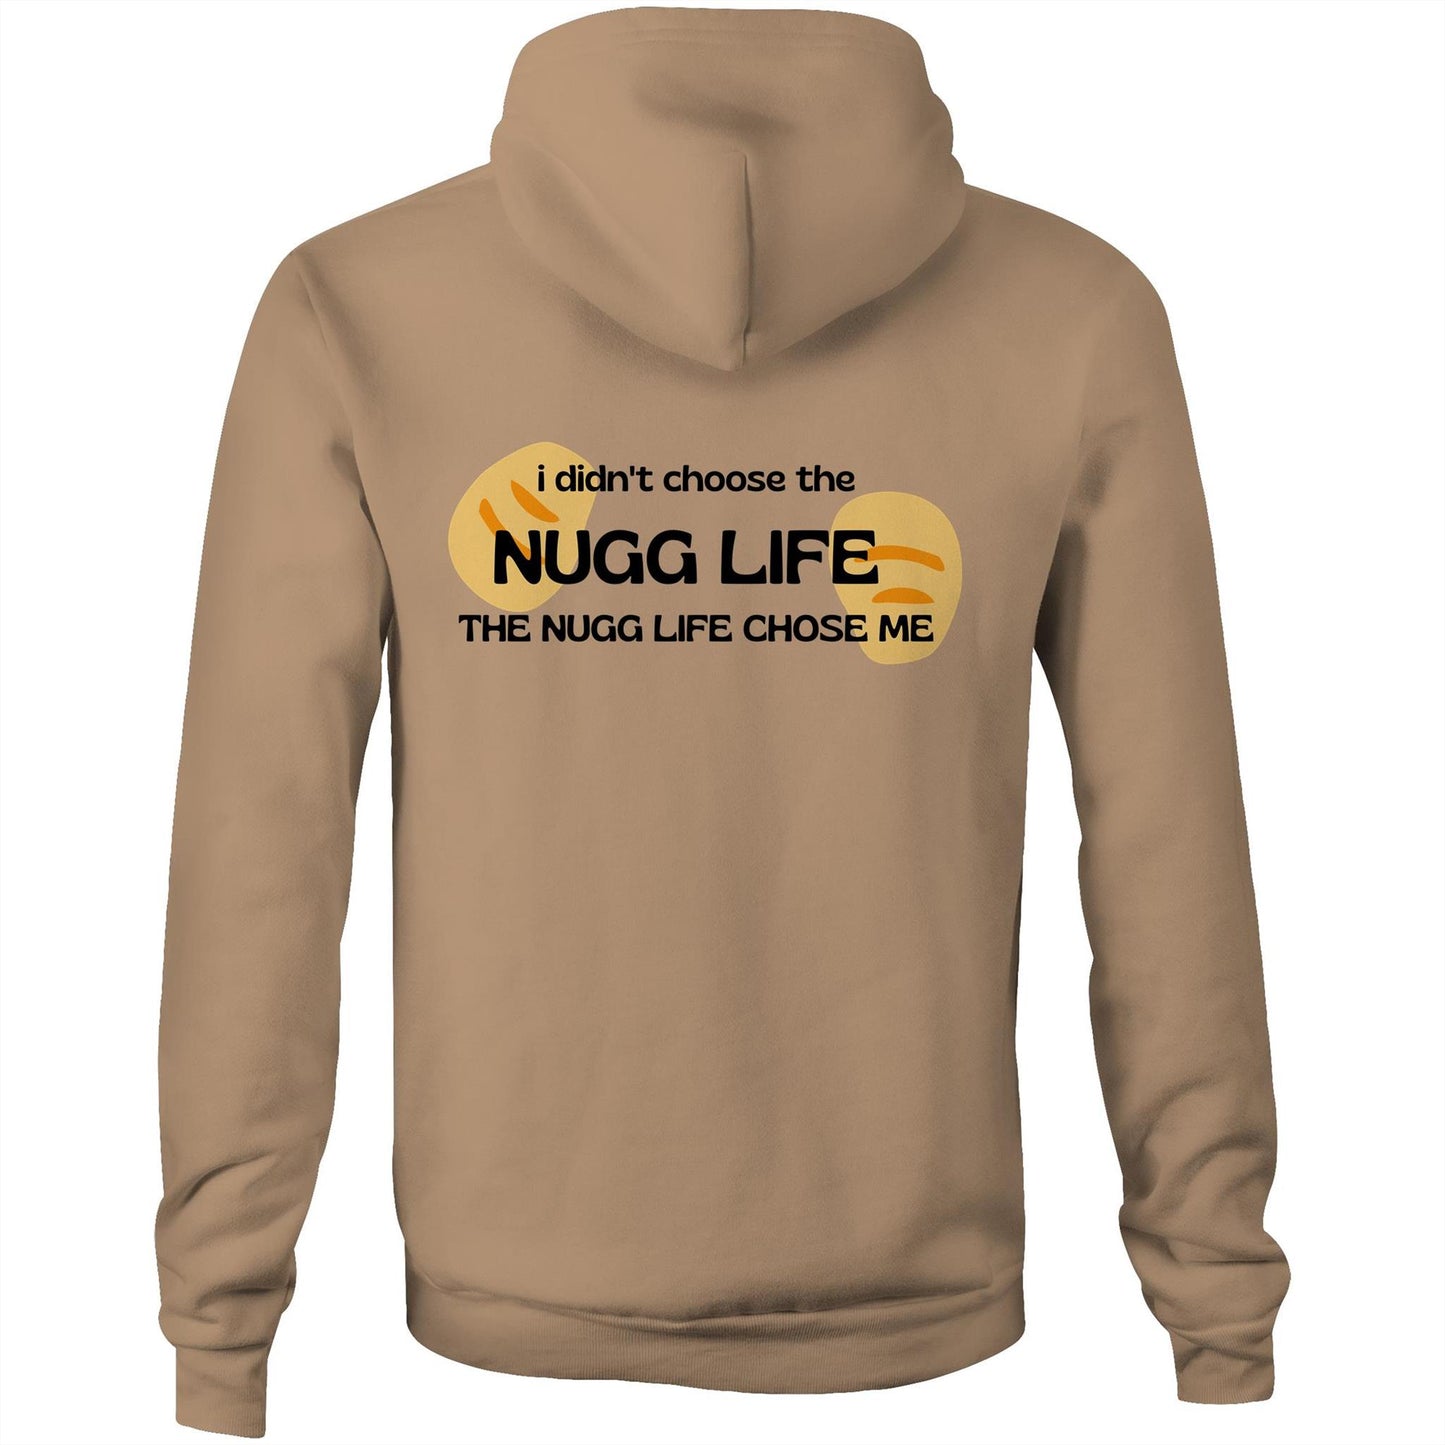 "The Nugg Life Chose Me" -  Pocket Hoodie Sweatshirt